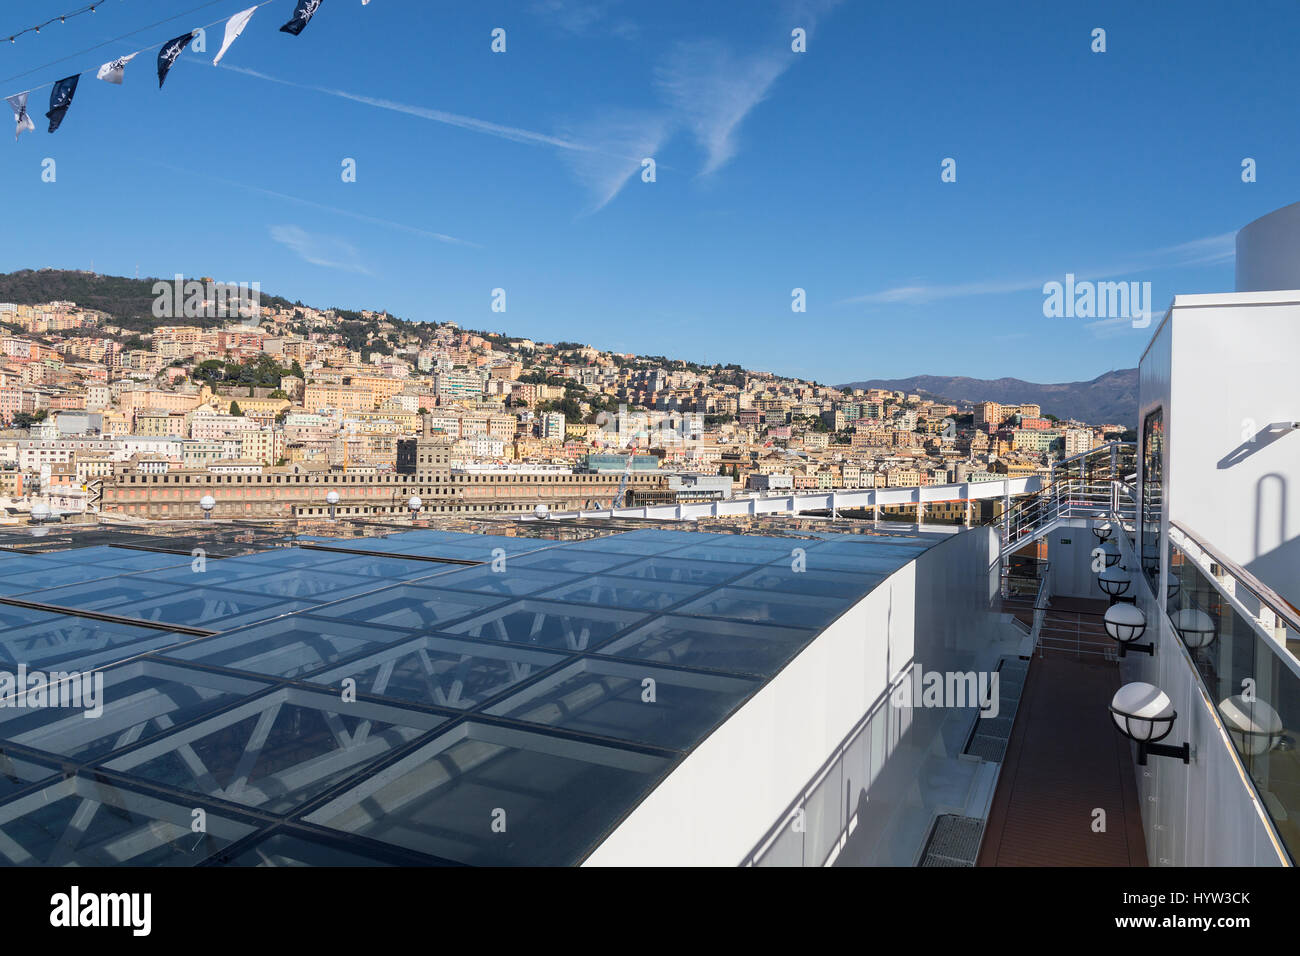 Genoa, Liguria, Italy - February 26, 2017: Cityscape view of Genoa town from open upper deck of cruise liner MSC Splendida Stock Photo